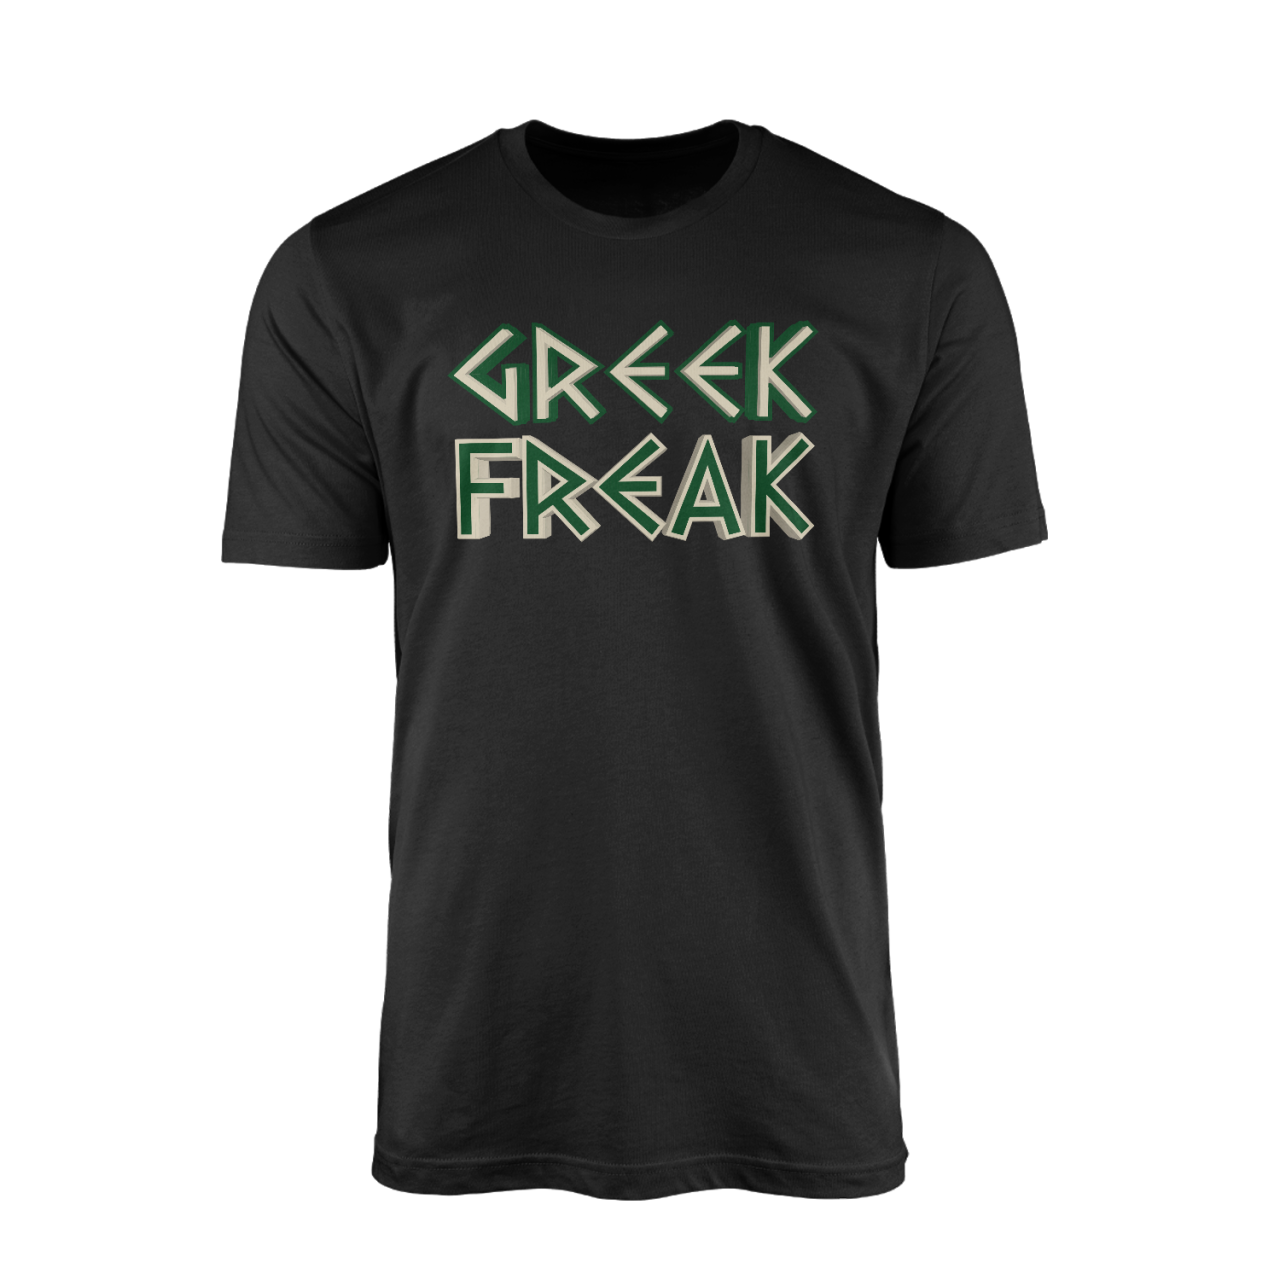 Greek Freak Siyah Tshirt